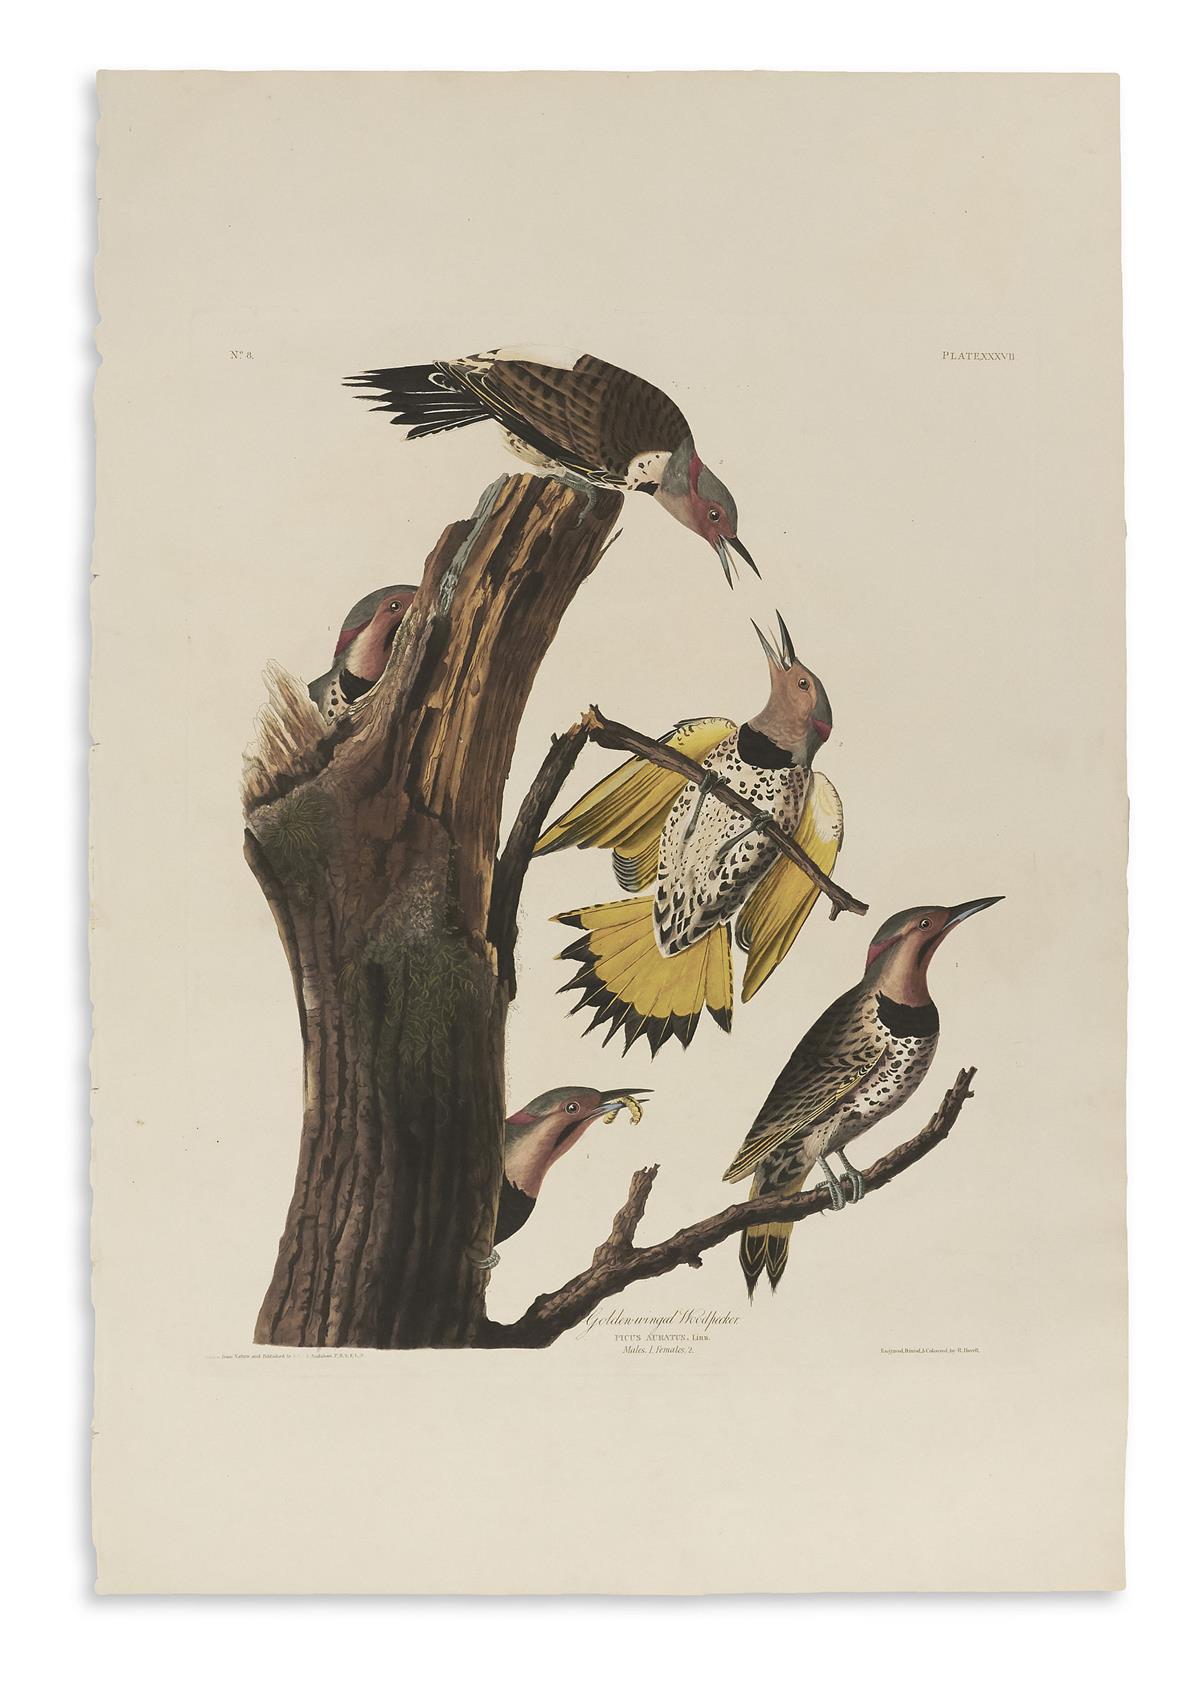 AUDUBON, JOHN JAMES. Golden-Winged Woodpecker. Plate XXXVII.